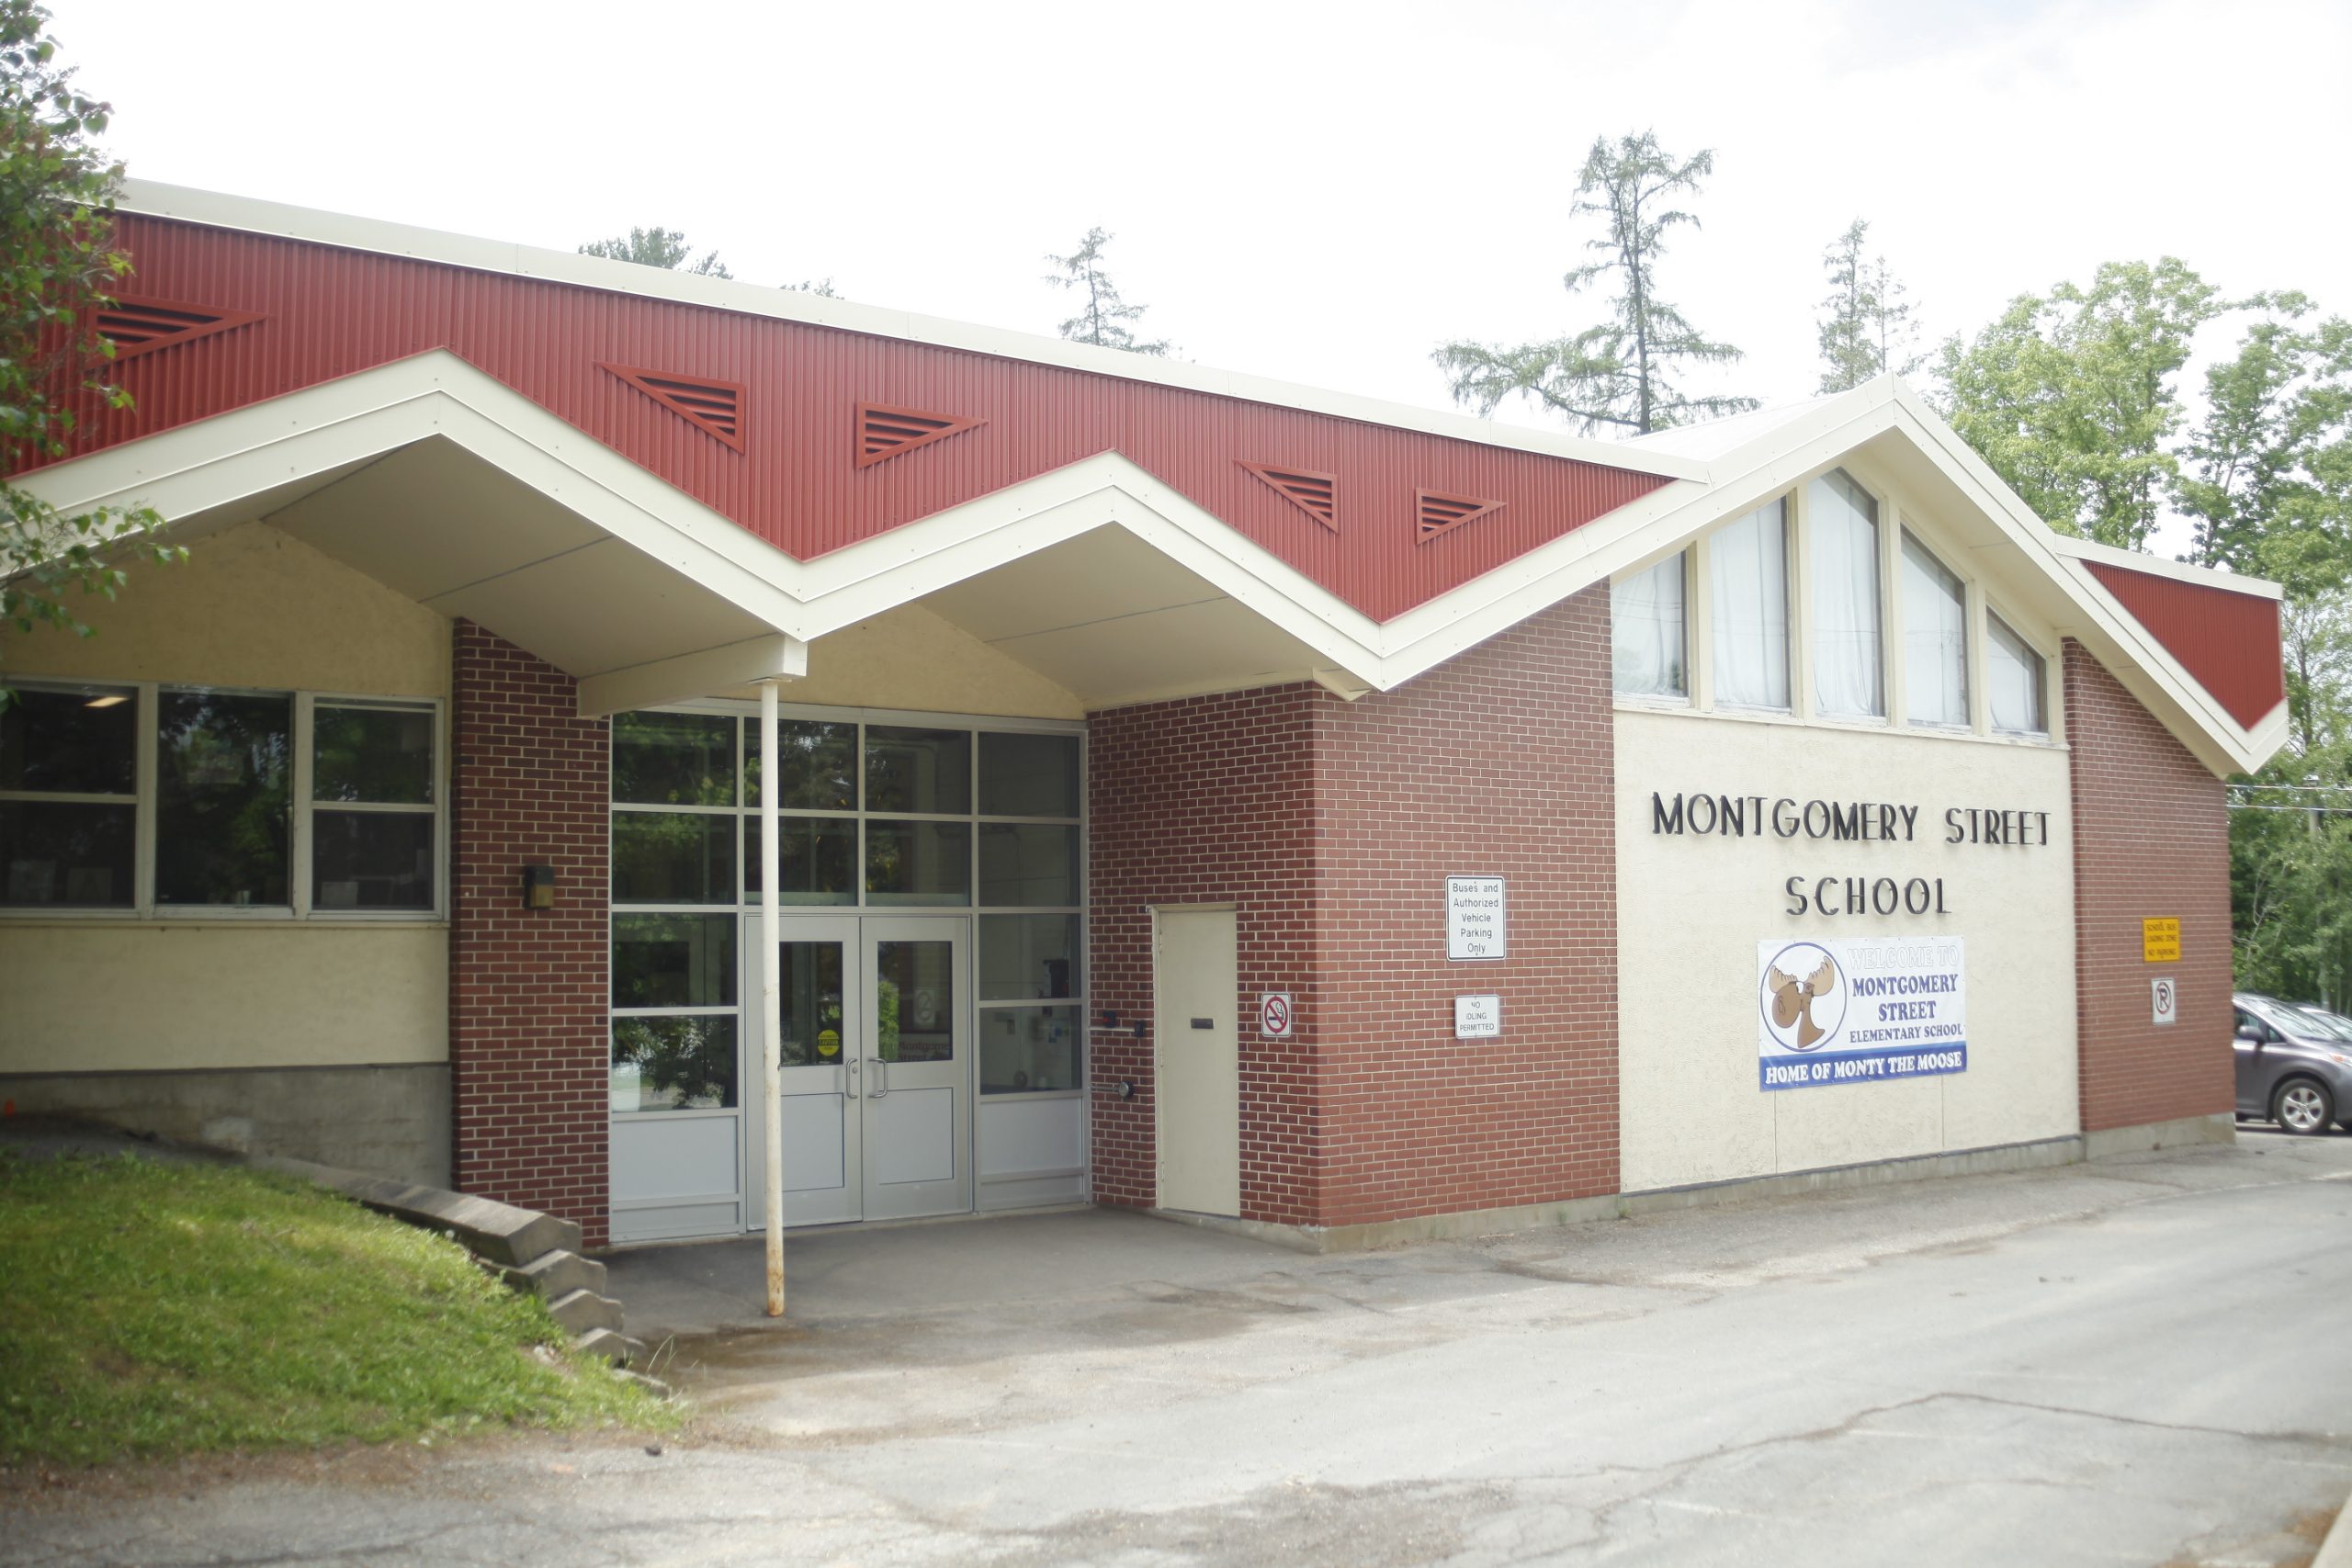 Montgomery Street Elementary School.